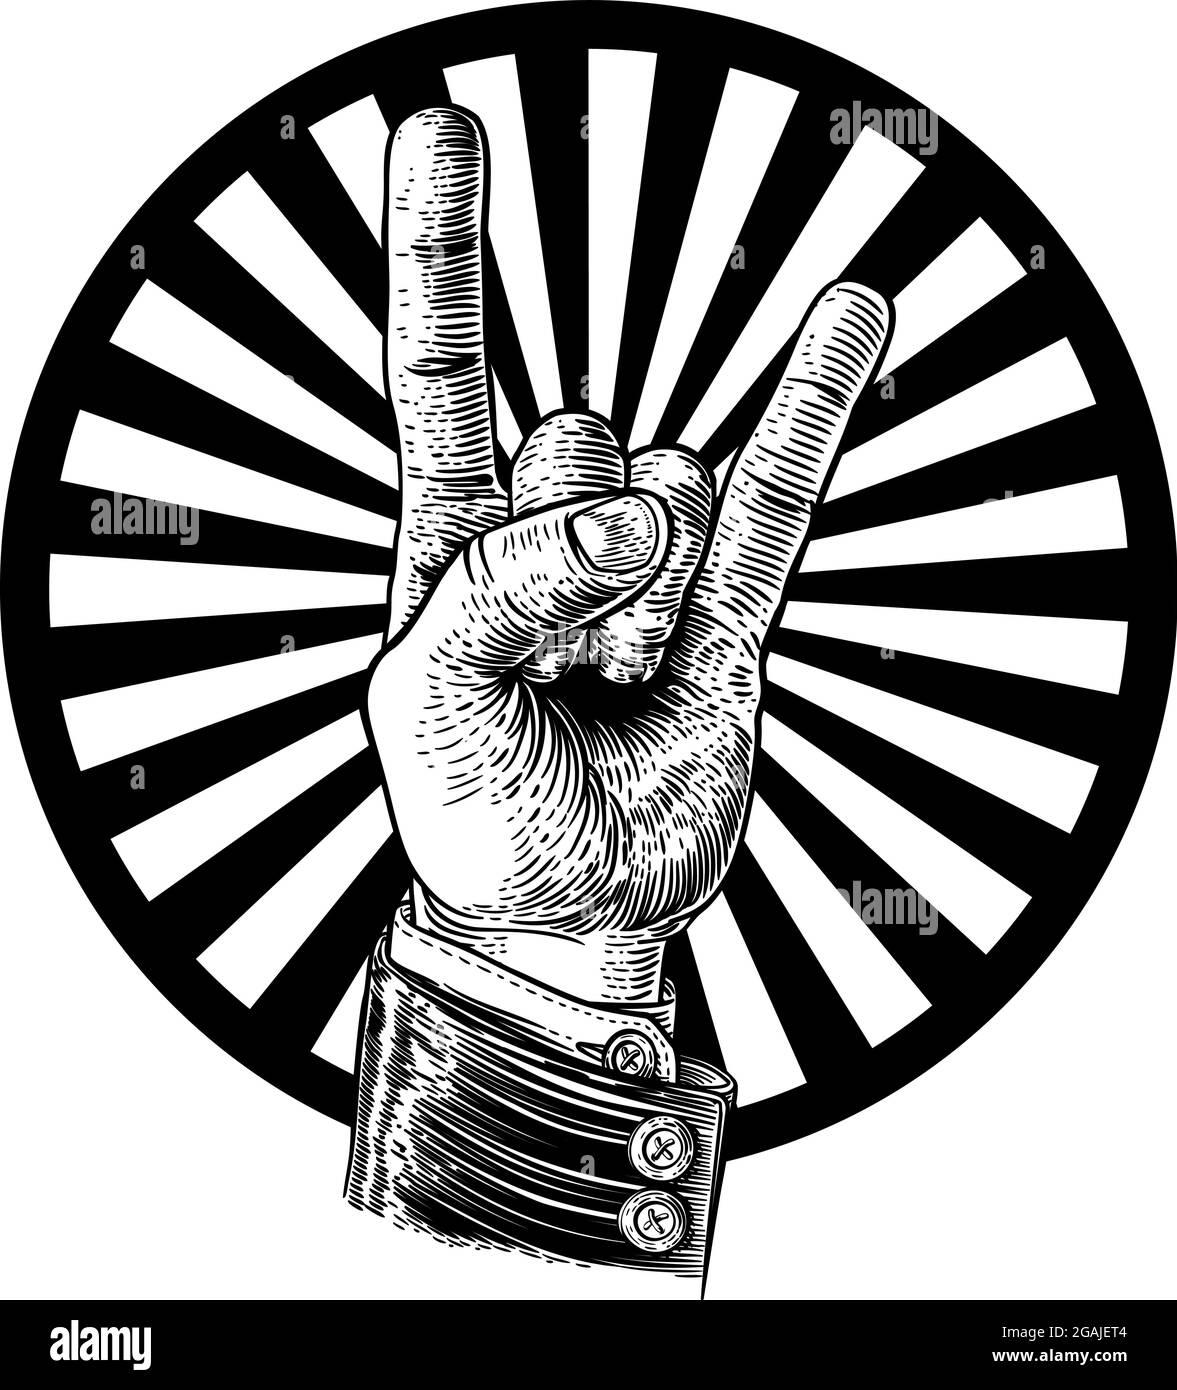 Geste De Signe De Main Heavy Metal Rock Music Illustration de Vecteur